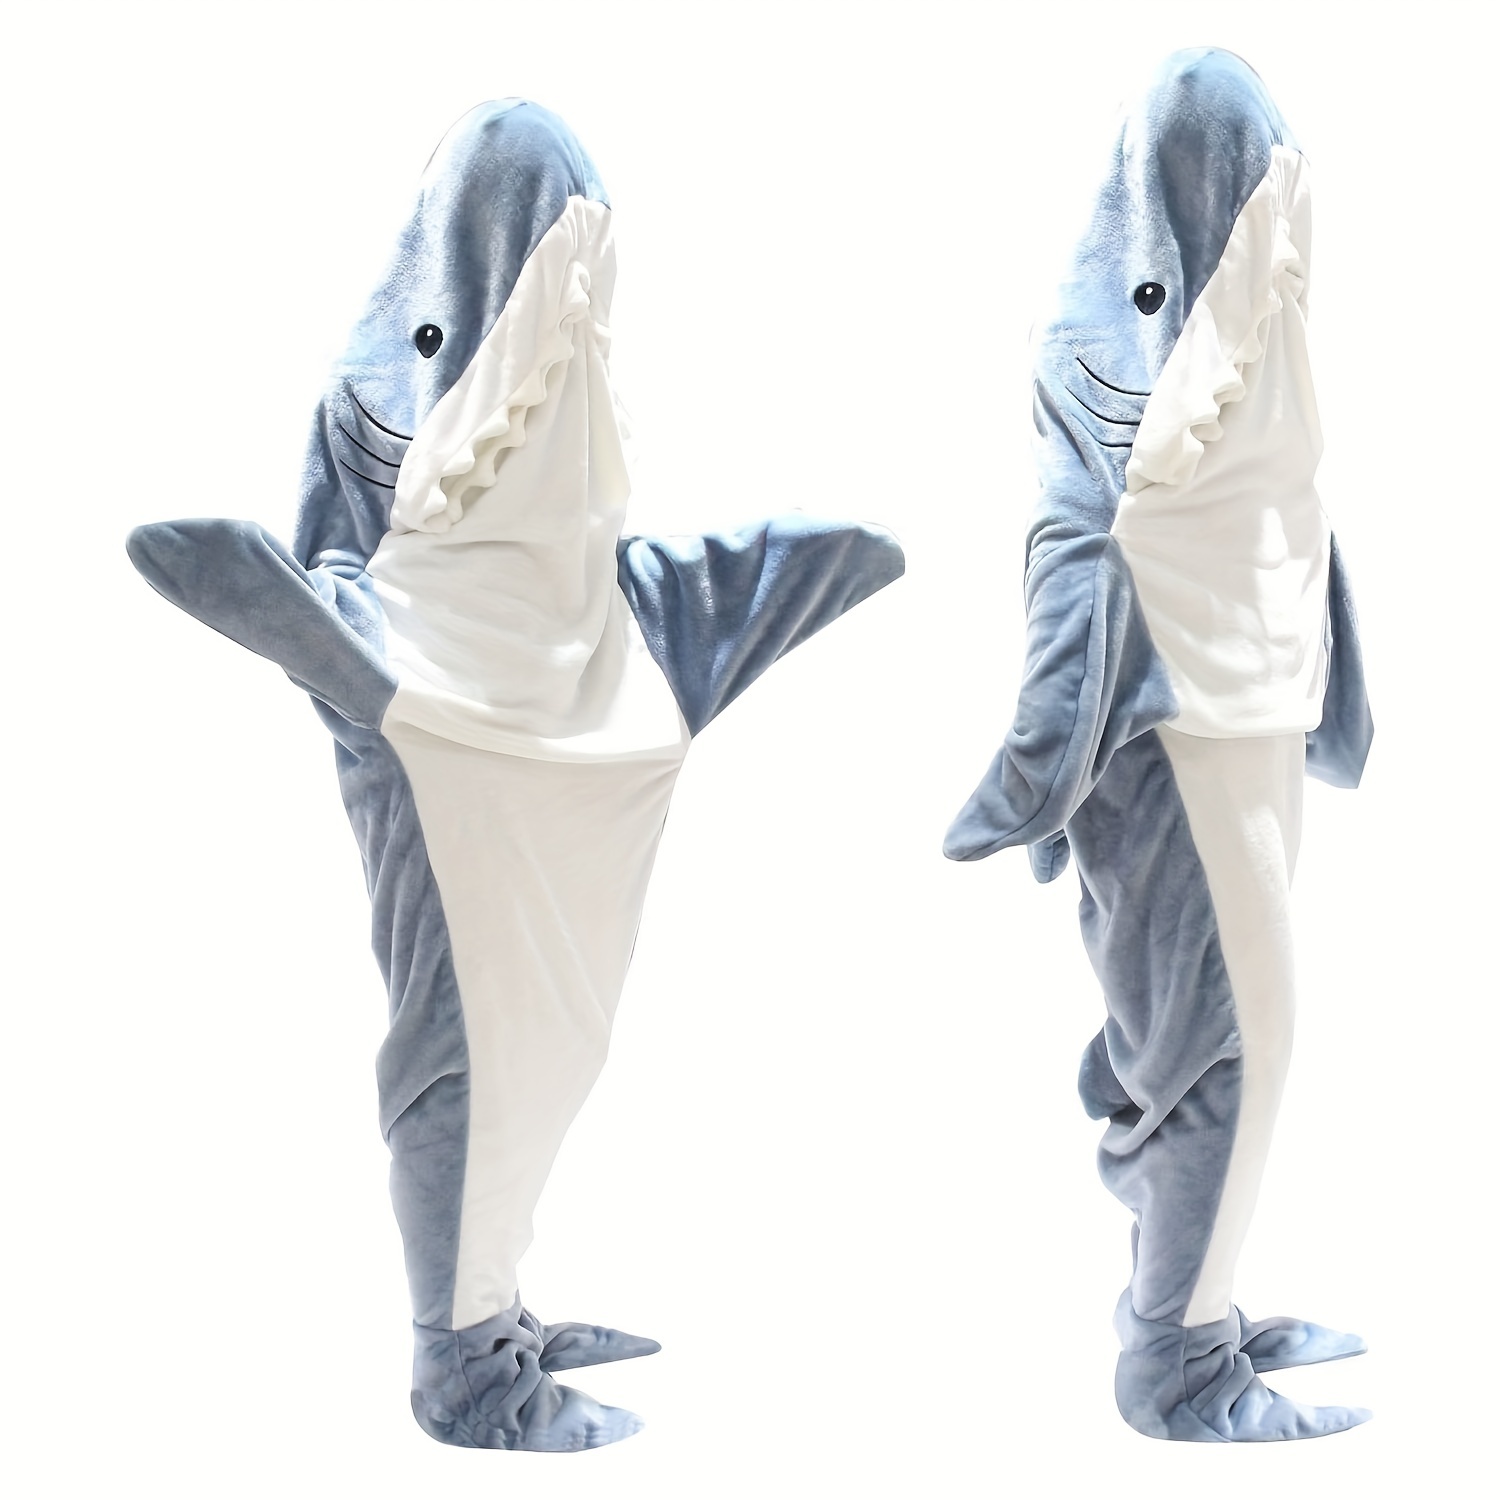 Pijama tiburón ballena